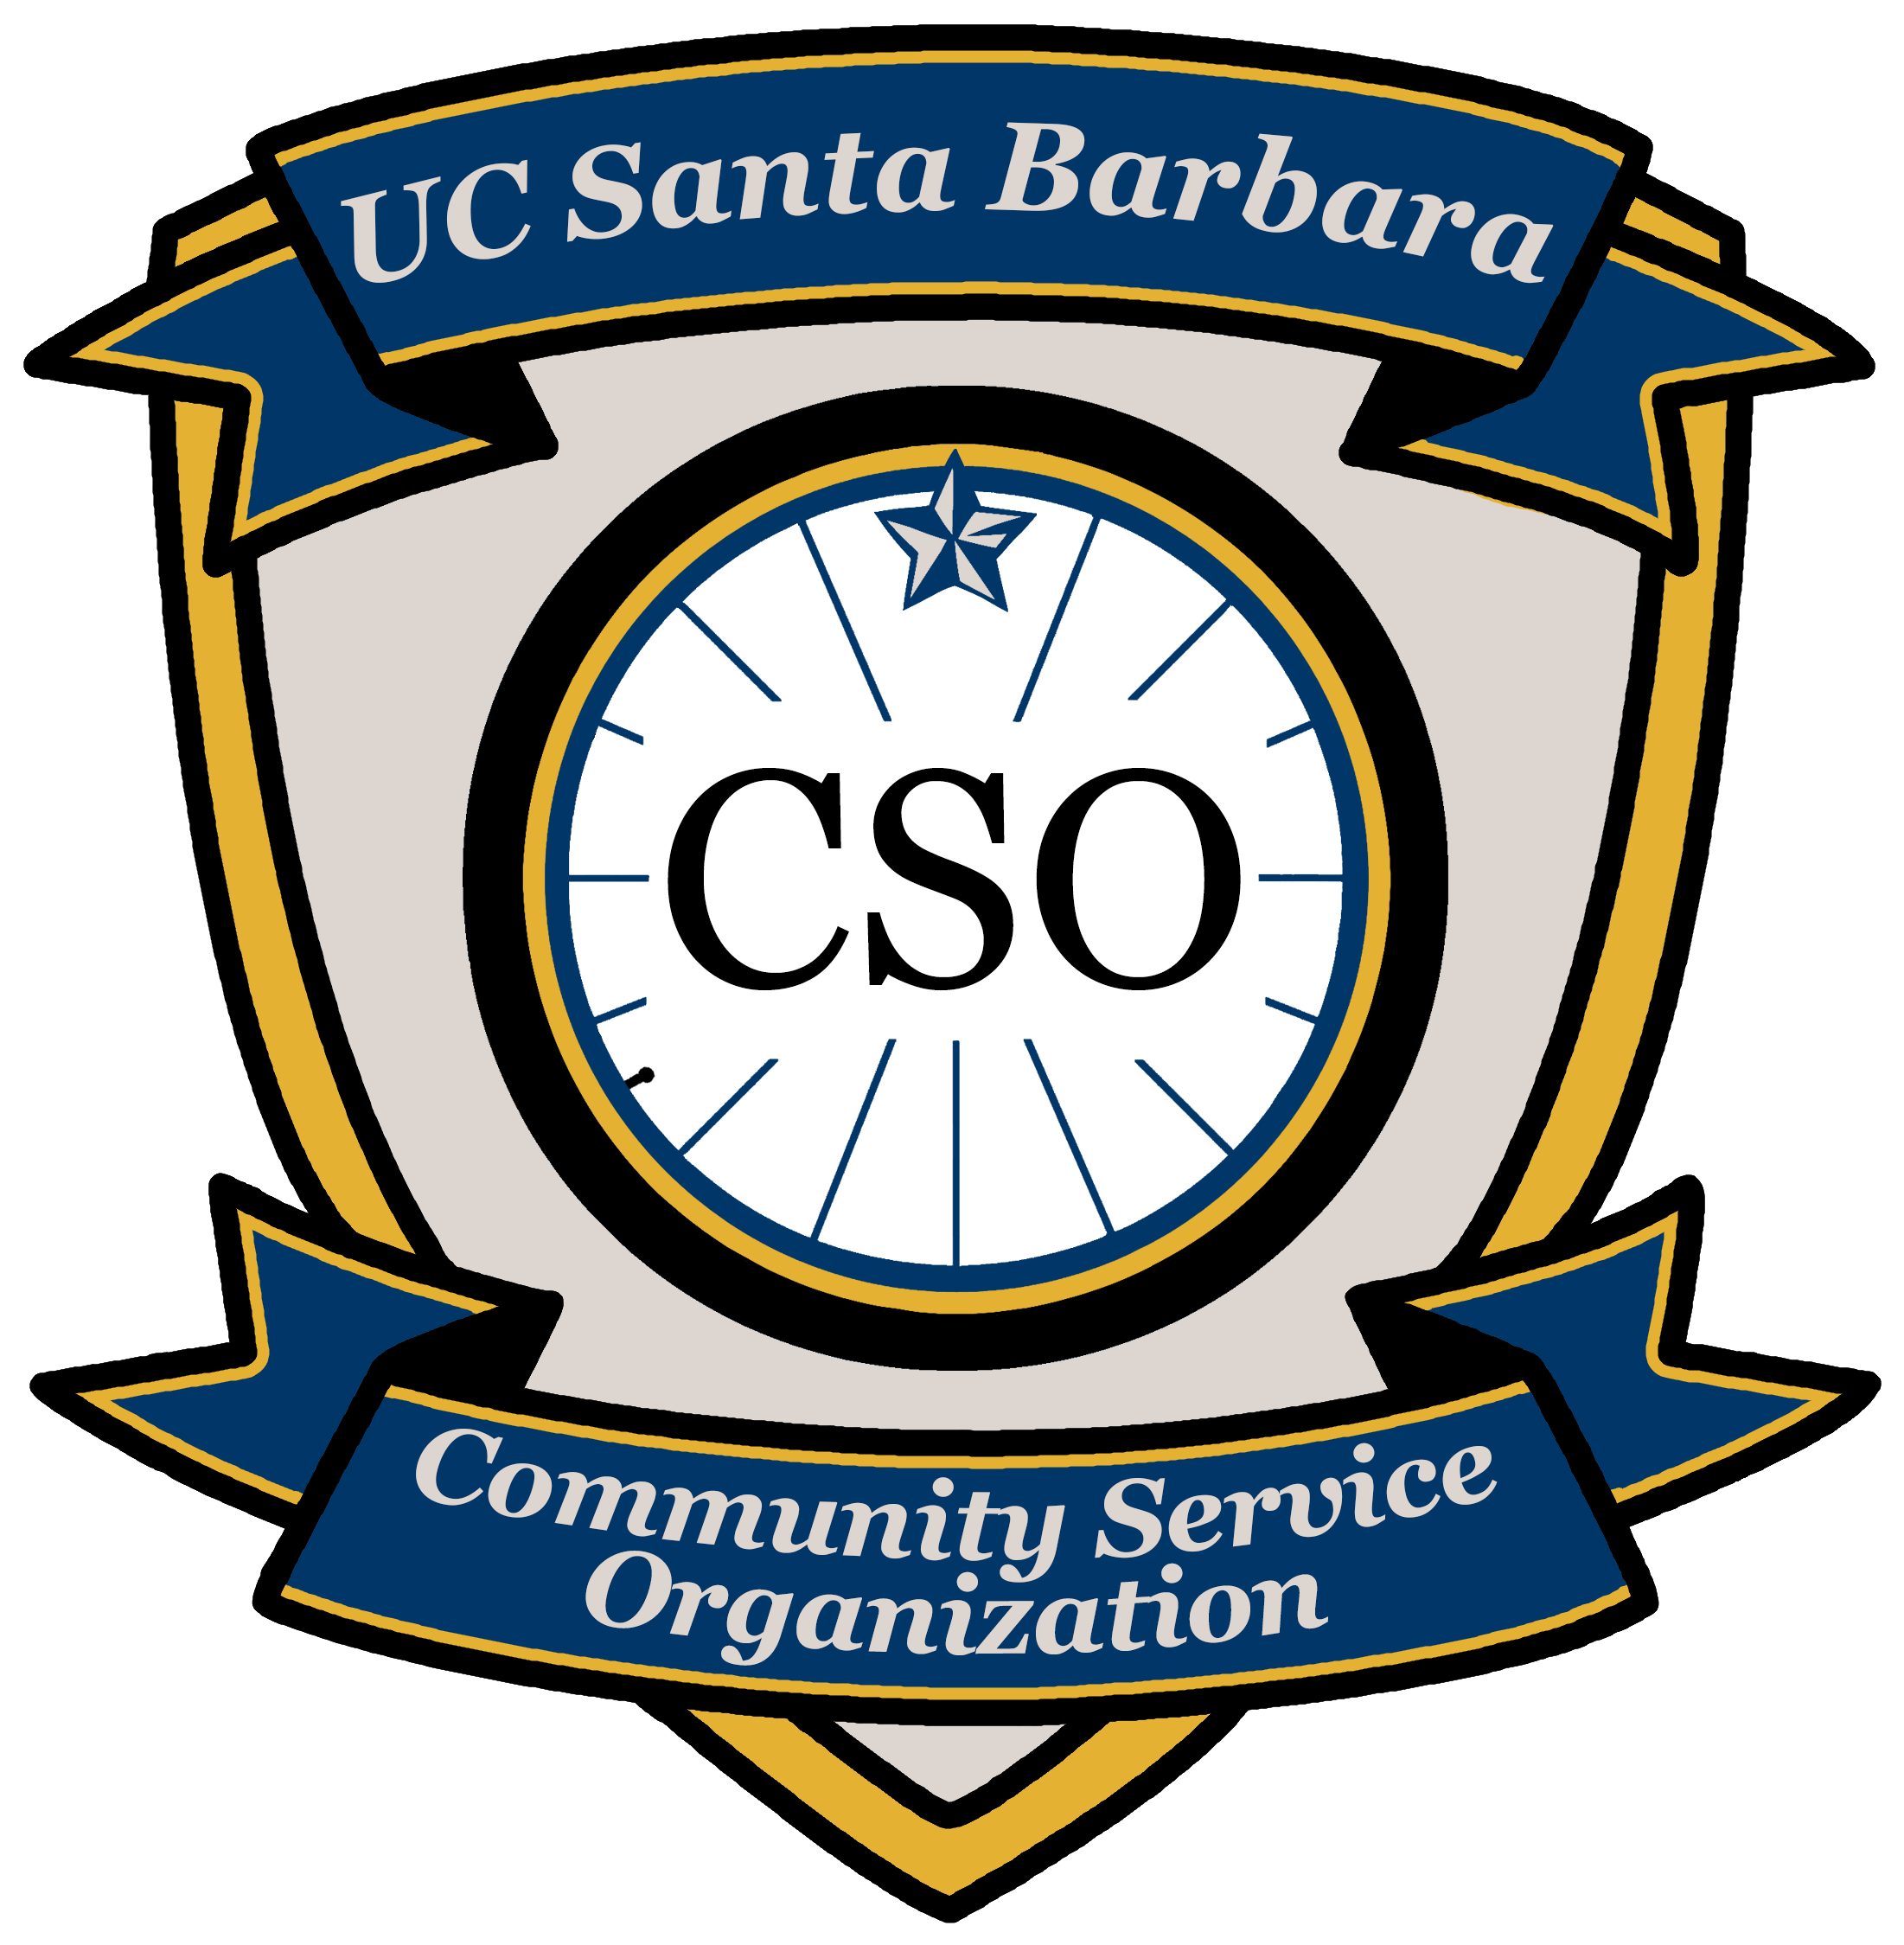 CSO Logo